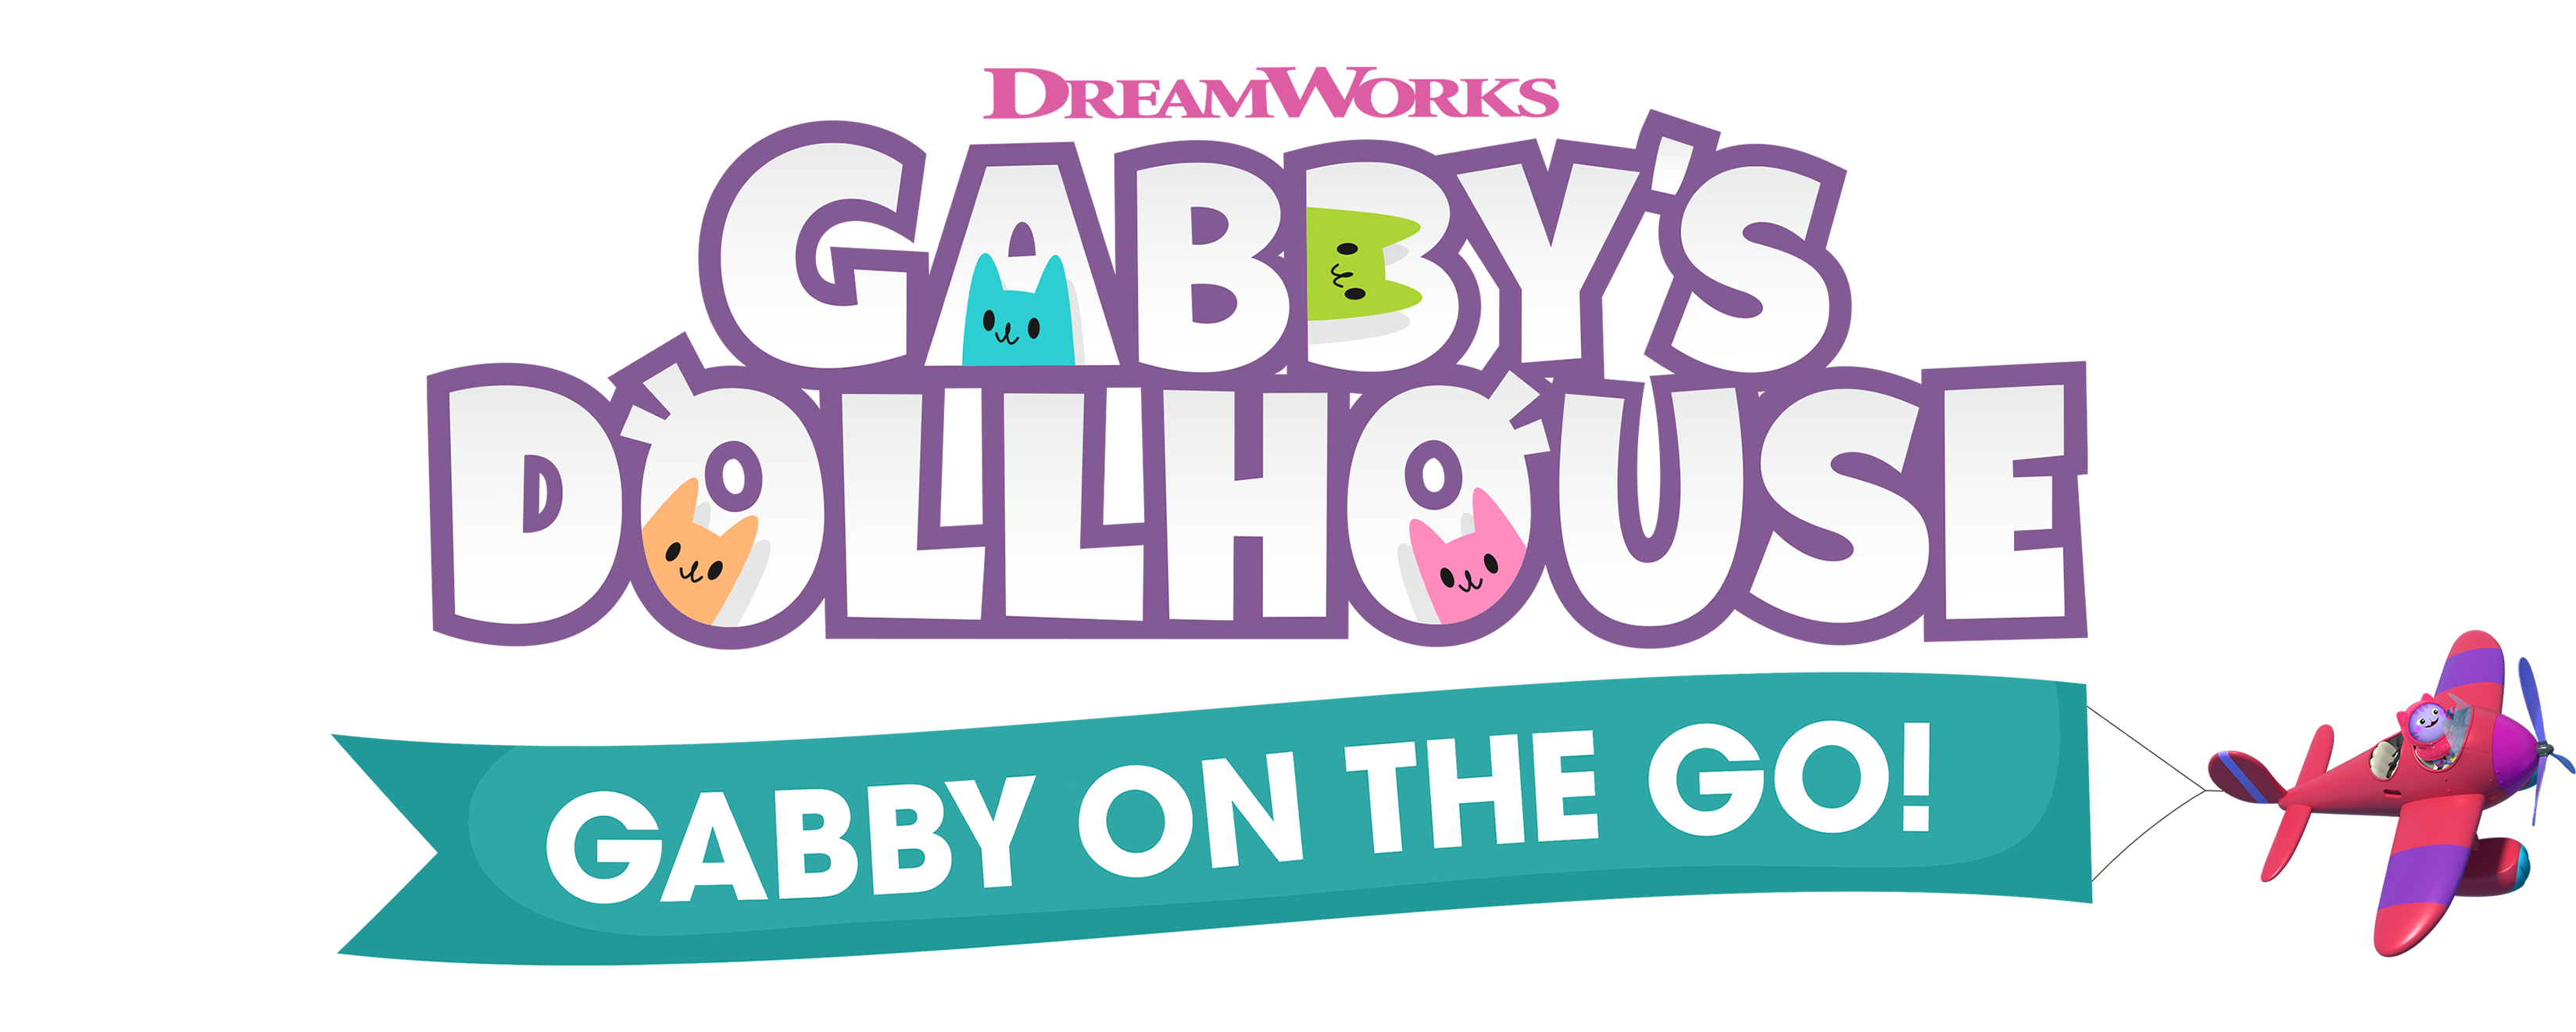 FAO Schwarz Becomes Destination for 'Gabby's Dollhouse' Fans